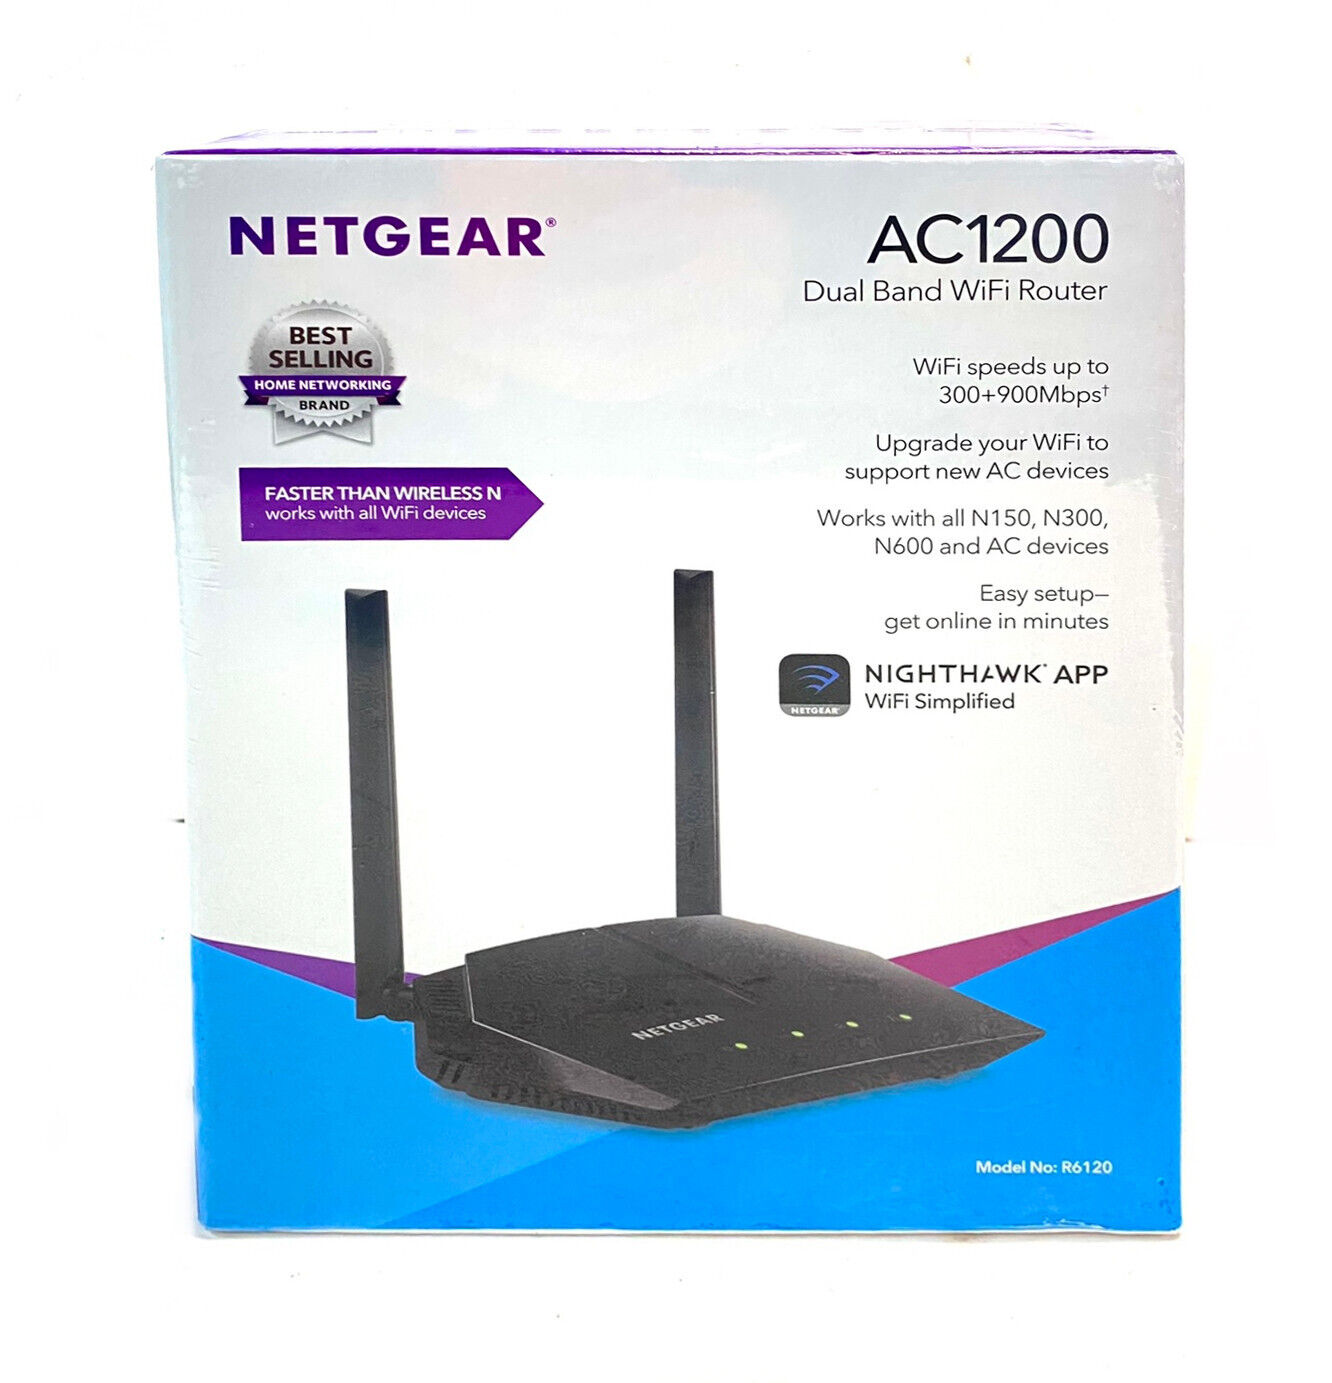 Netgear AC1200 R6120 Smart WiFi Wireless Router Dual Band Gigabit NEW SEALED